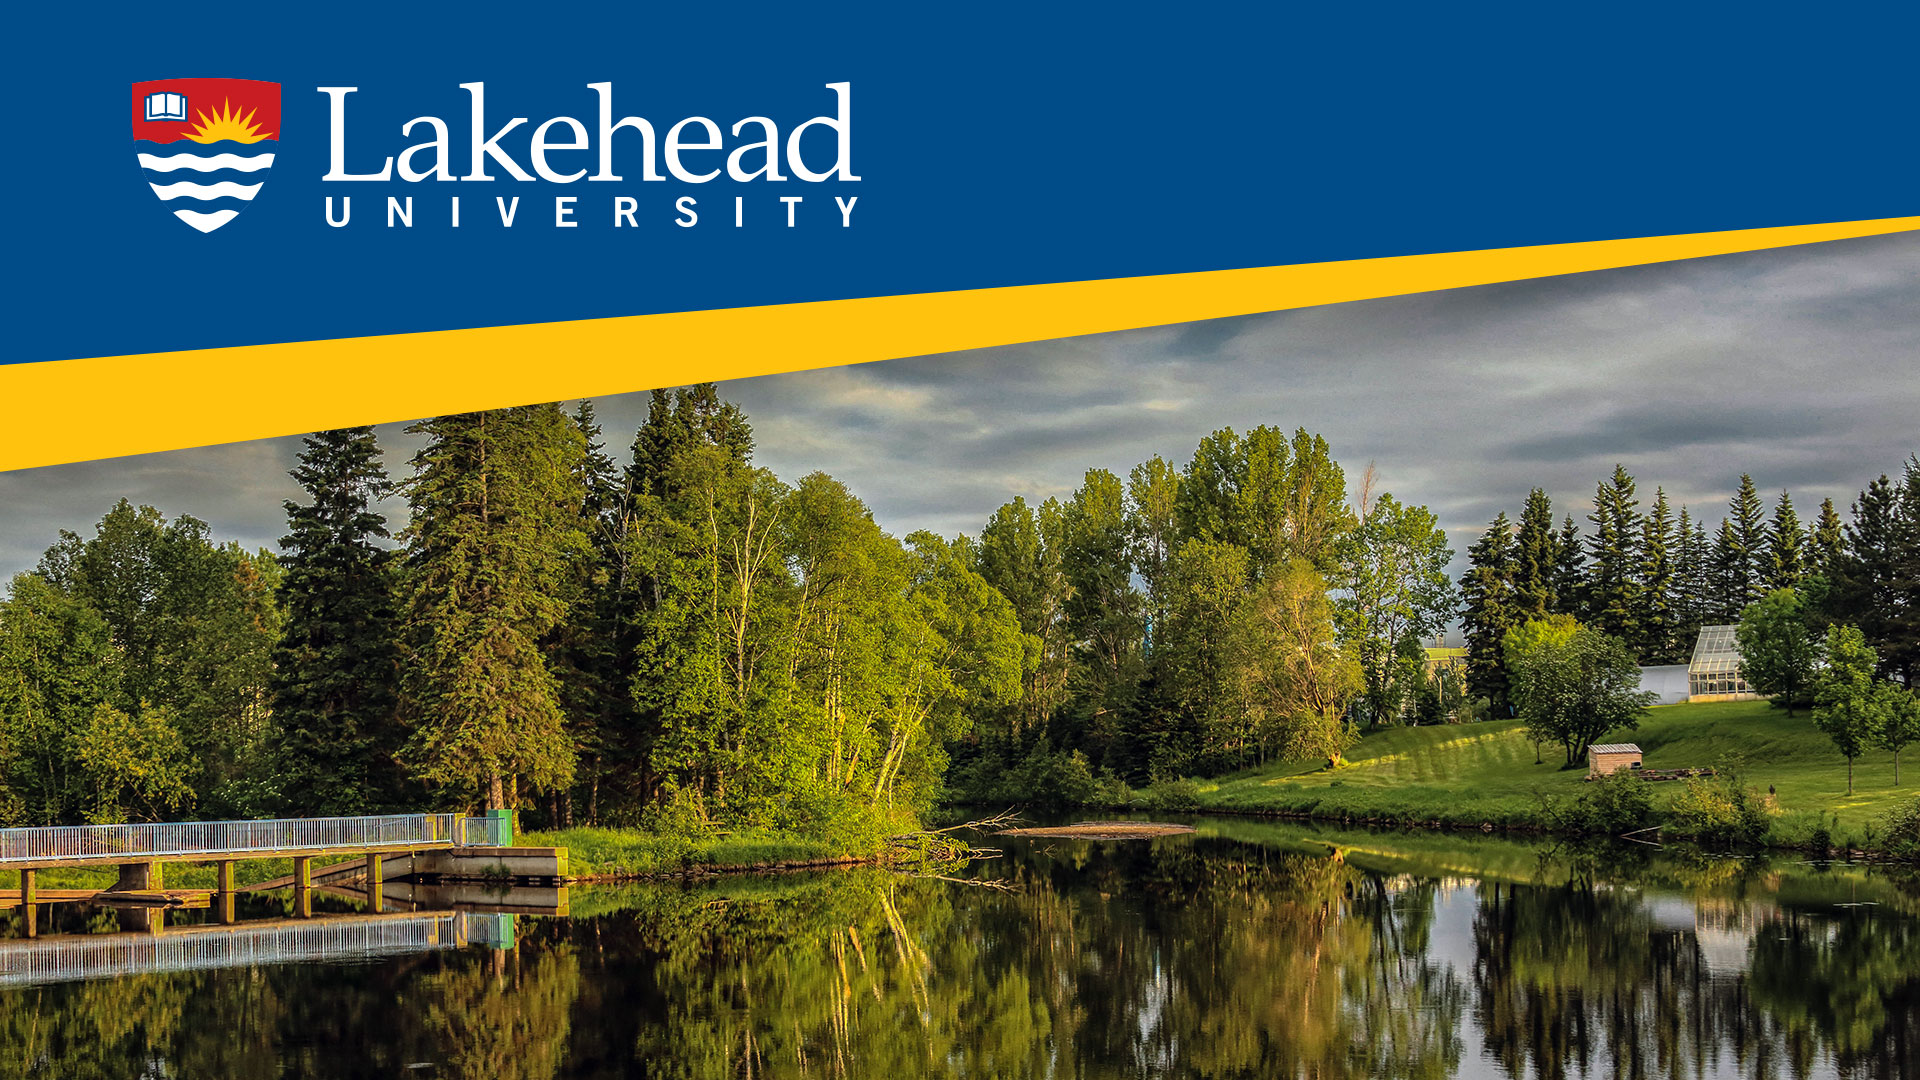 A photo of Lake Tamblyn on Thunder Bay campus featuring the Lakehead University logo